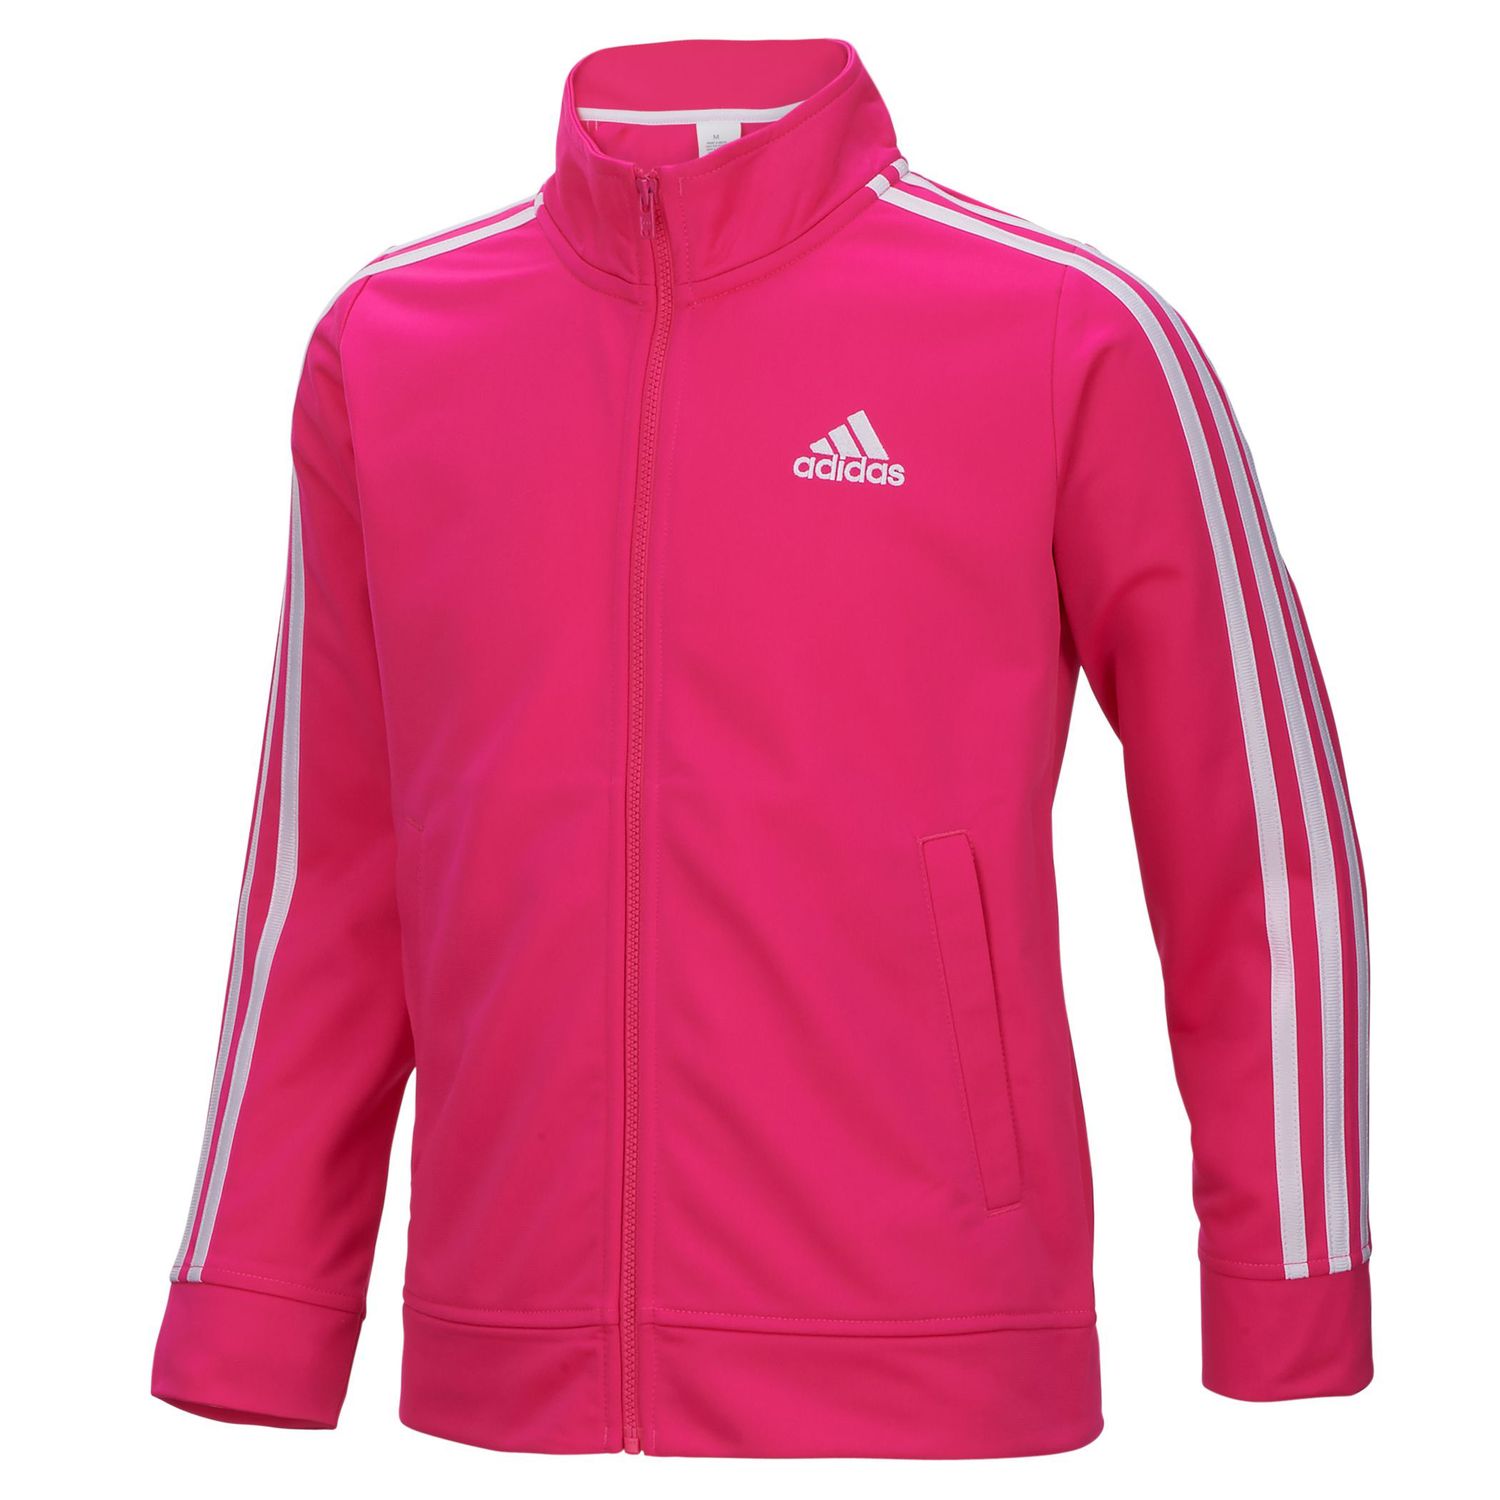 neon pink adidas jacket